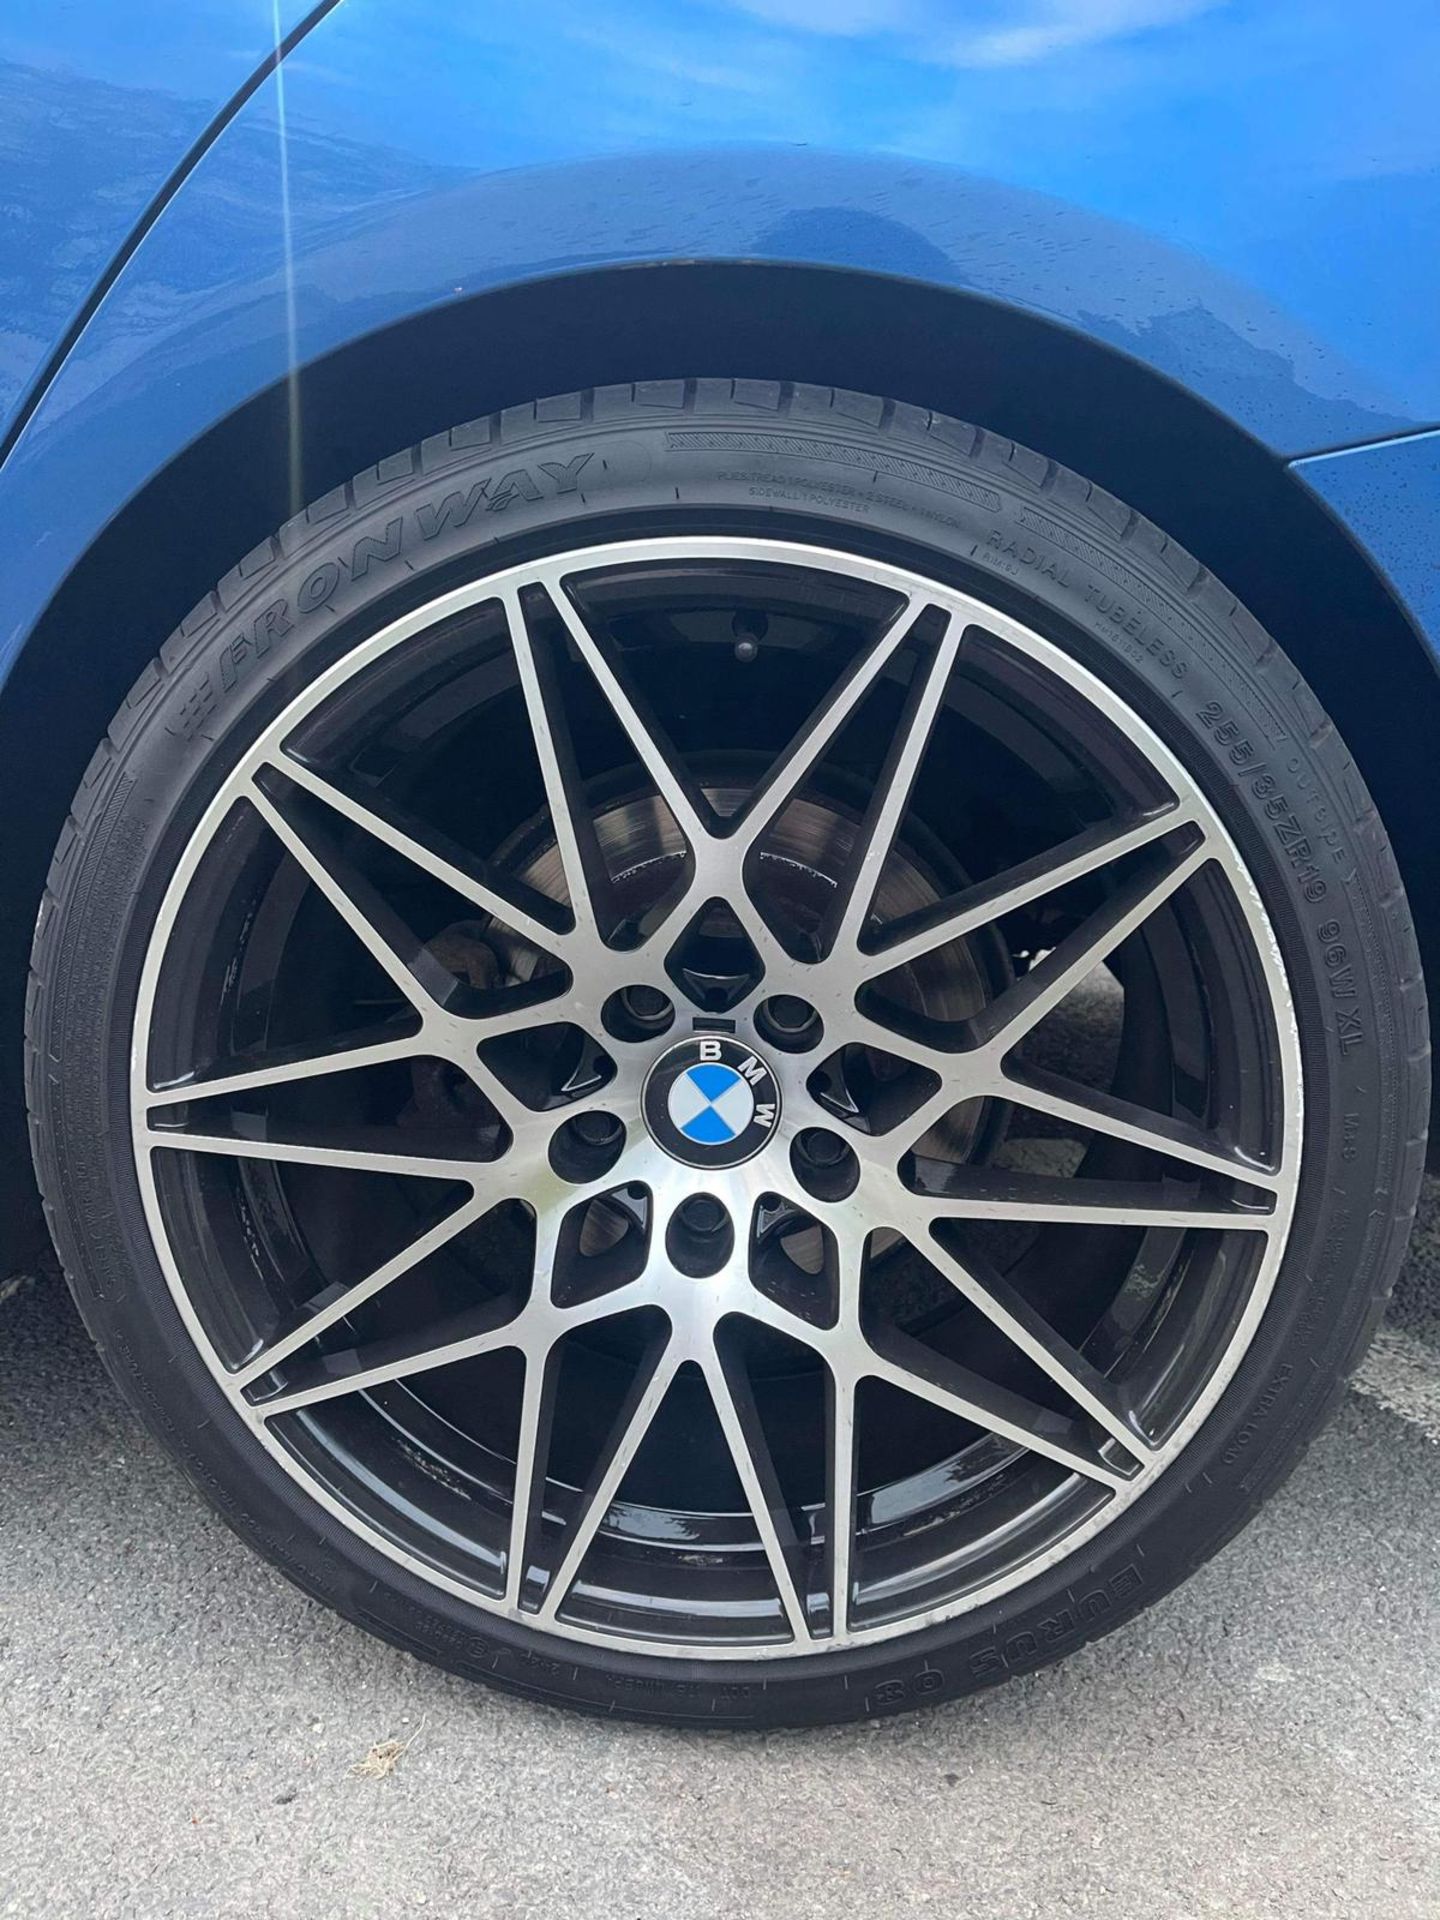 2013 BMW 320D M SPORT AUTO BLUE 4 DOOR SALOON, 2.0 DIESEL ENGINE *NO VAT* - Image 10 of 11